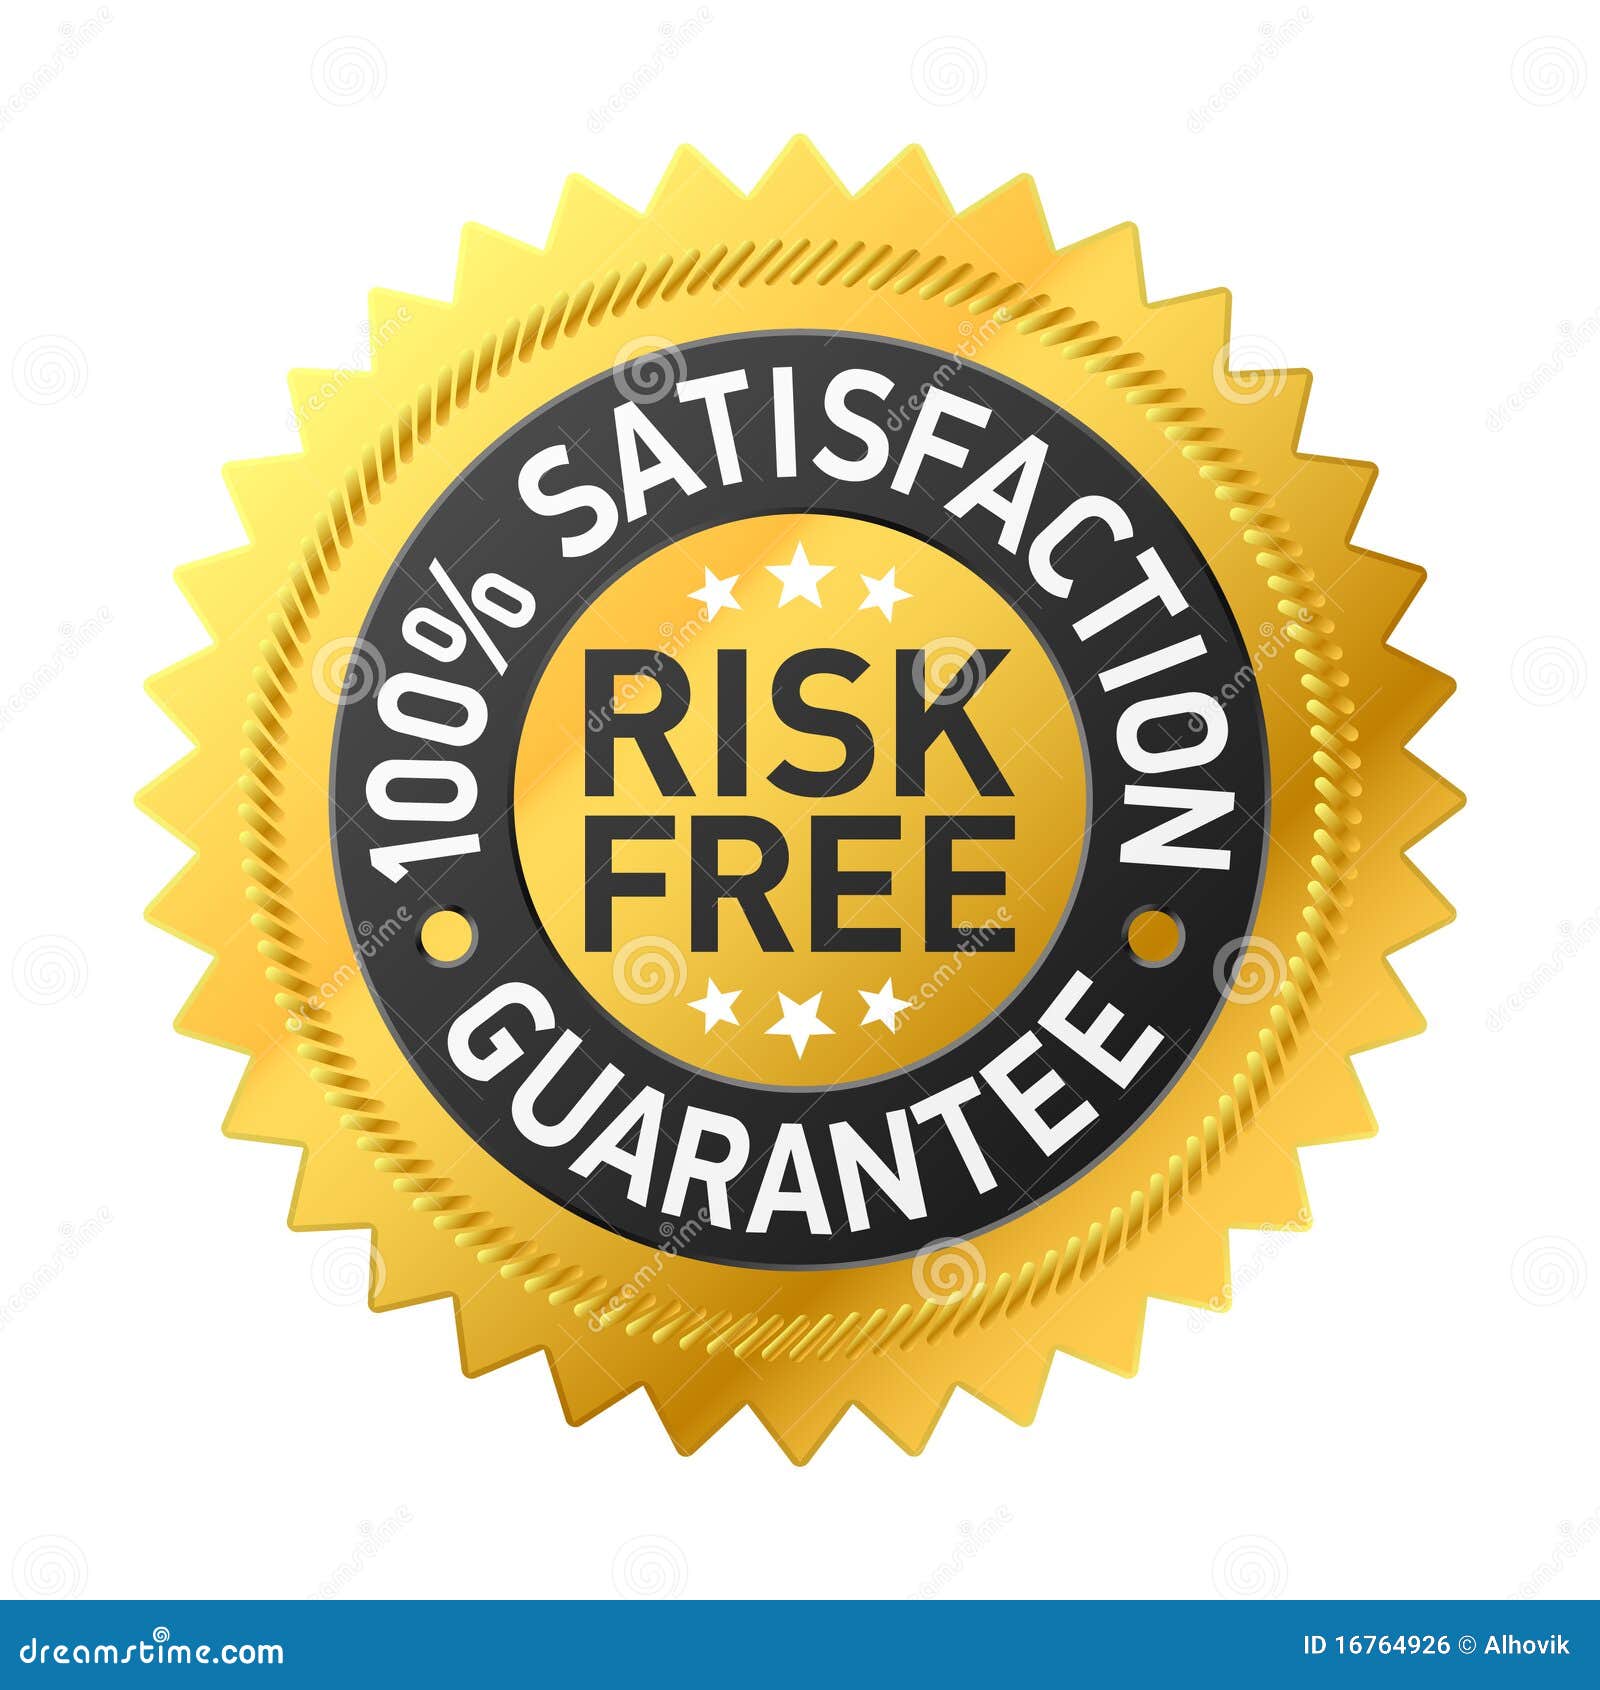 risk-free guarantee label